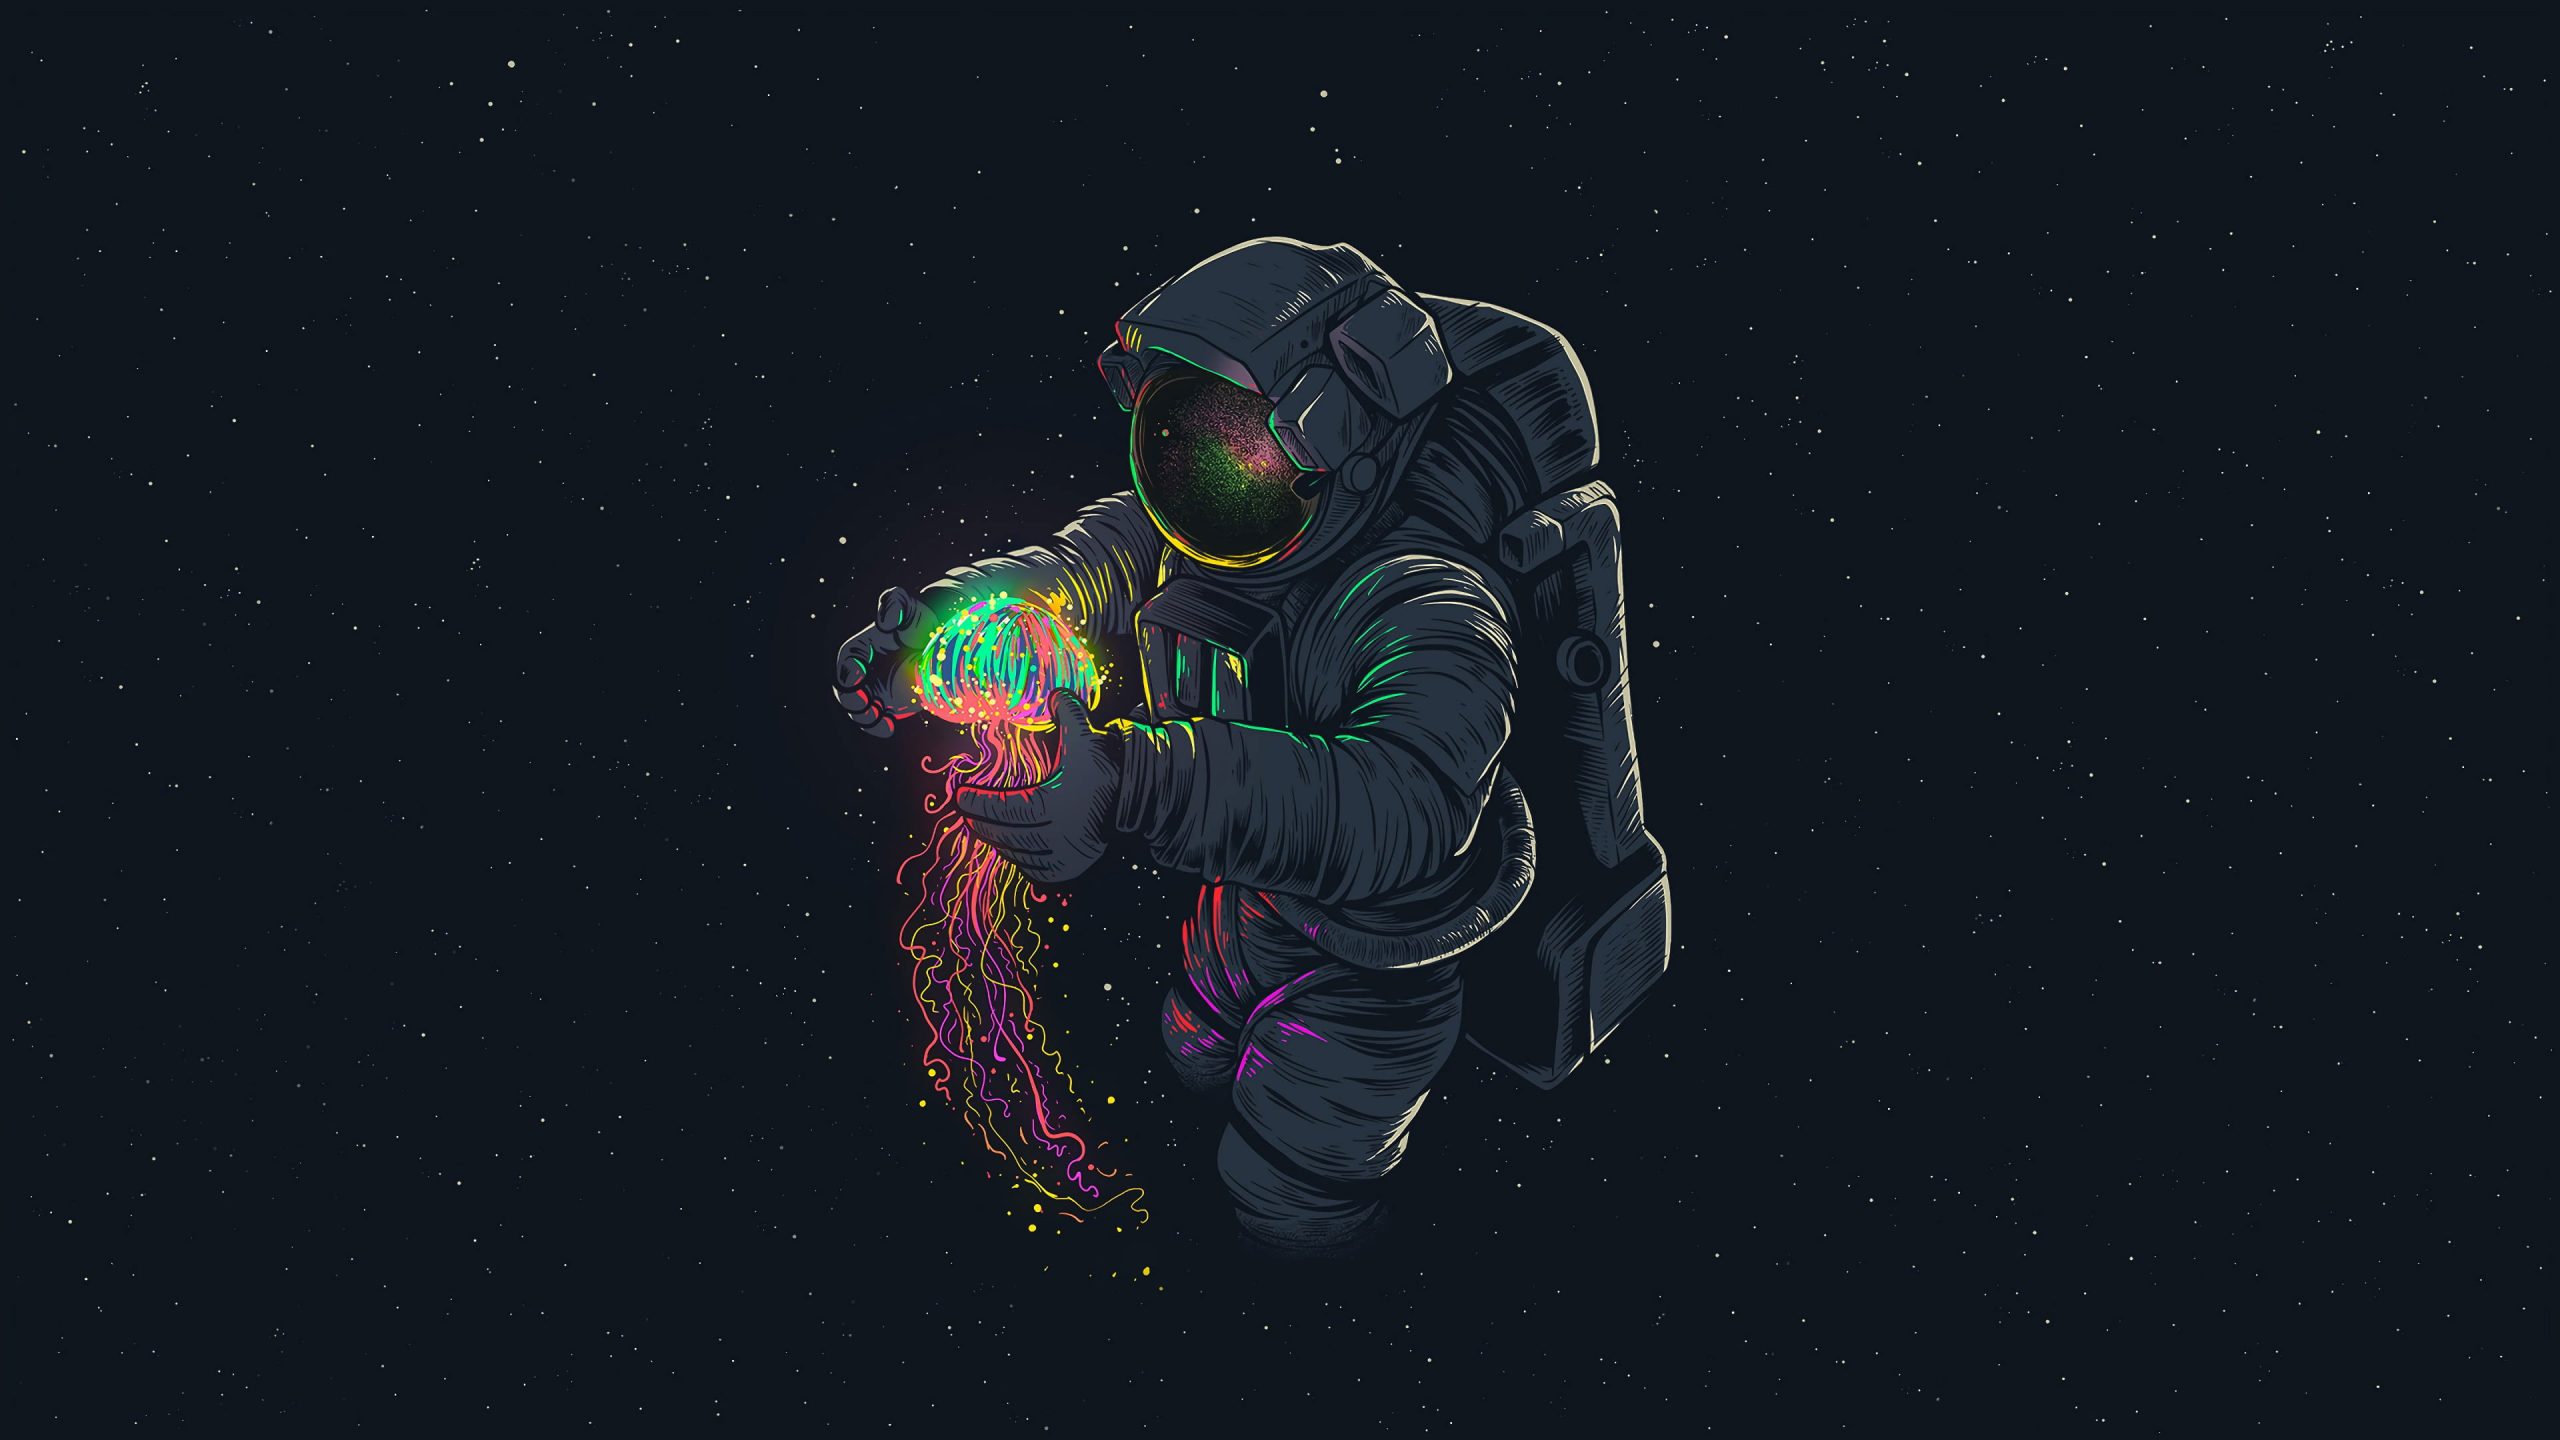 Astronaut, space, black background, artwork